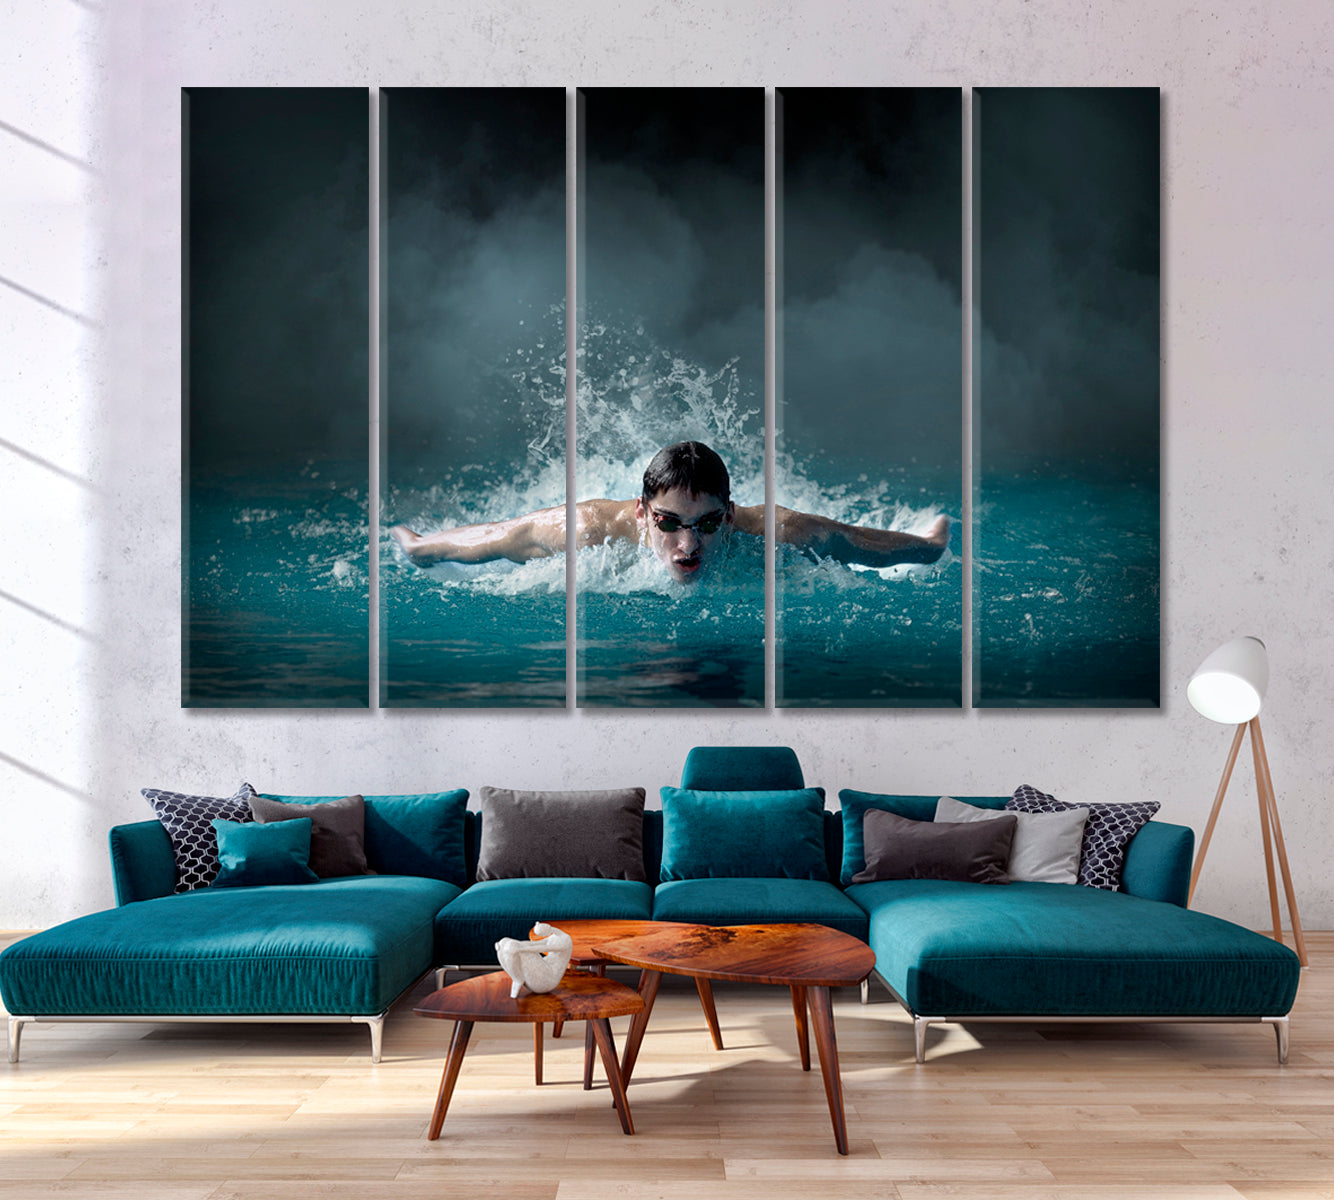 POWER Professional Swimmer Motivation Sport Poster Print Decor Artesty 5 panels 36" x 24" 